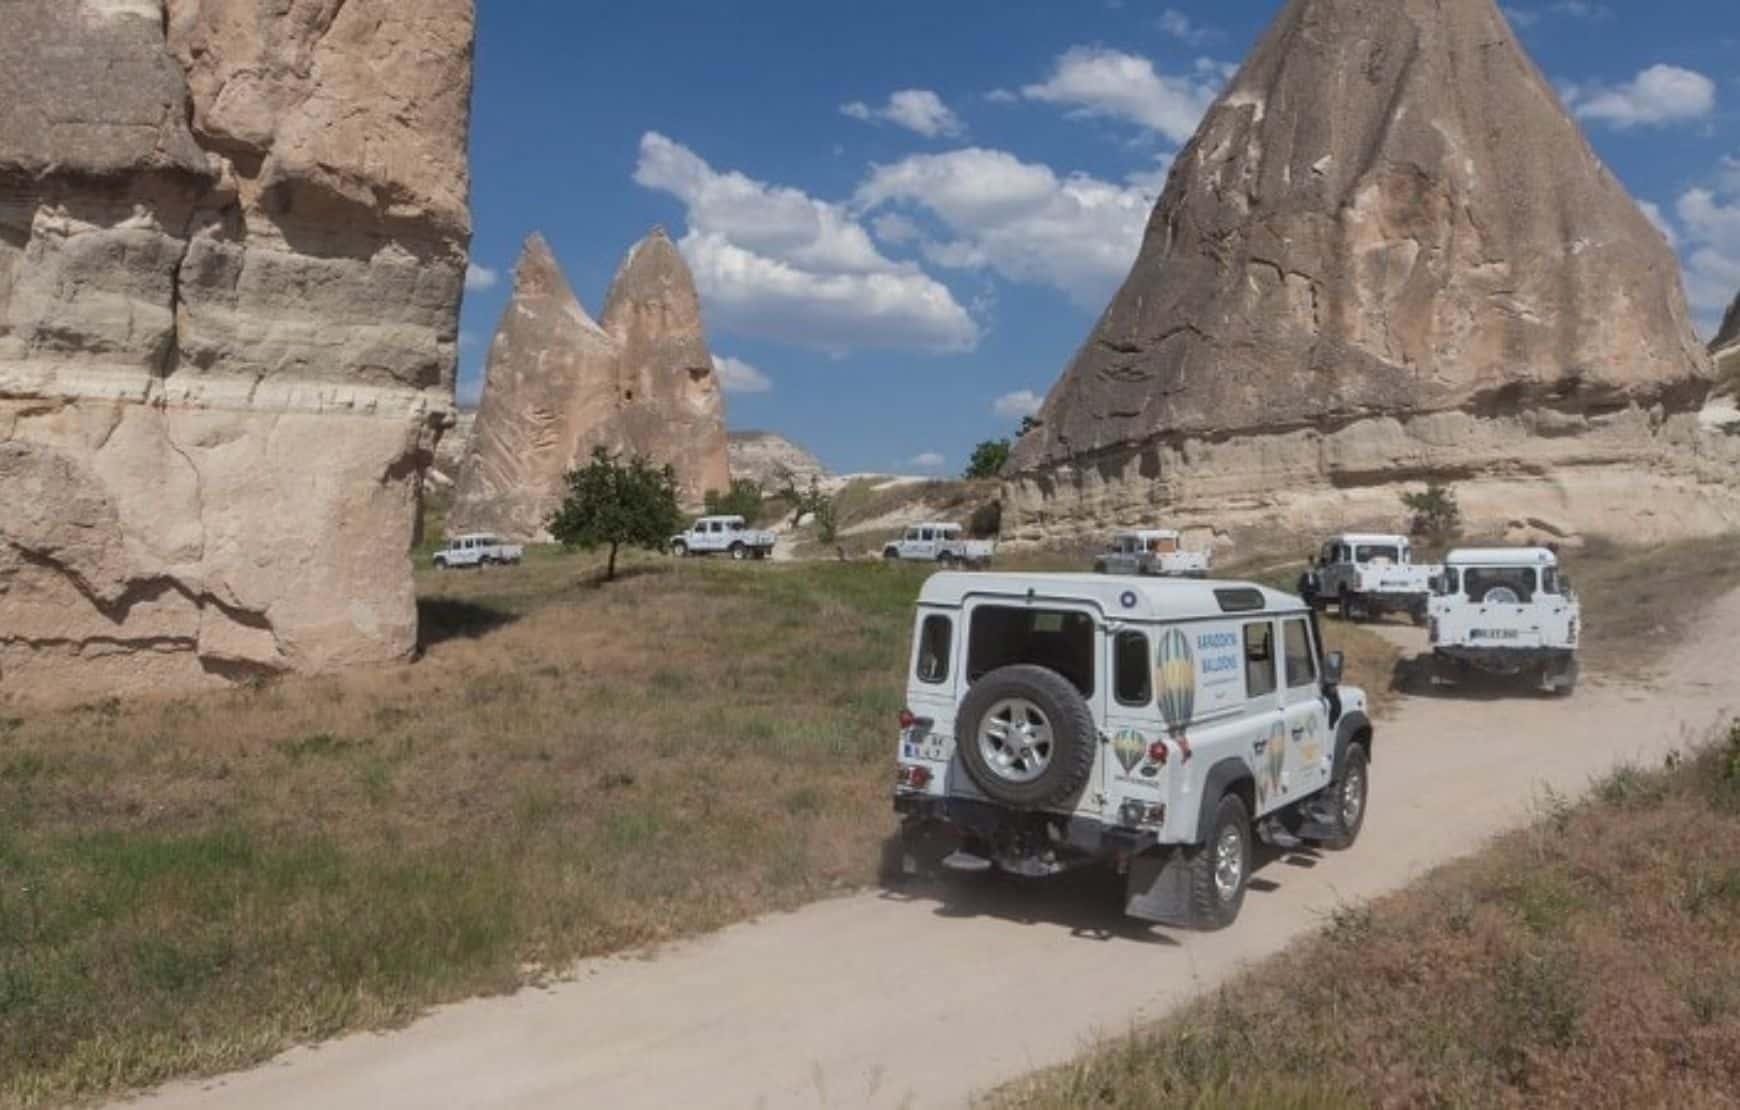 Jeep Safari in Cappadocia - between valleys